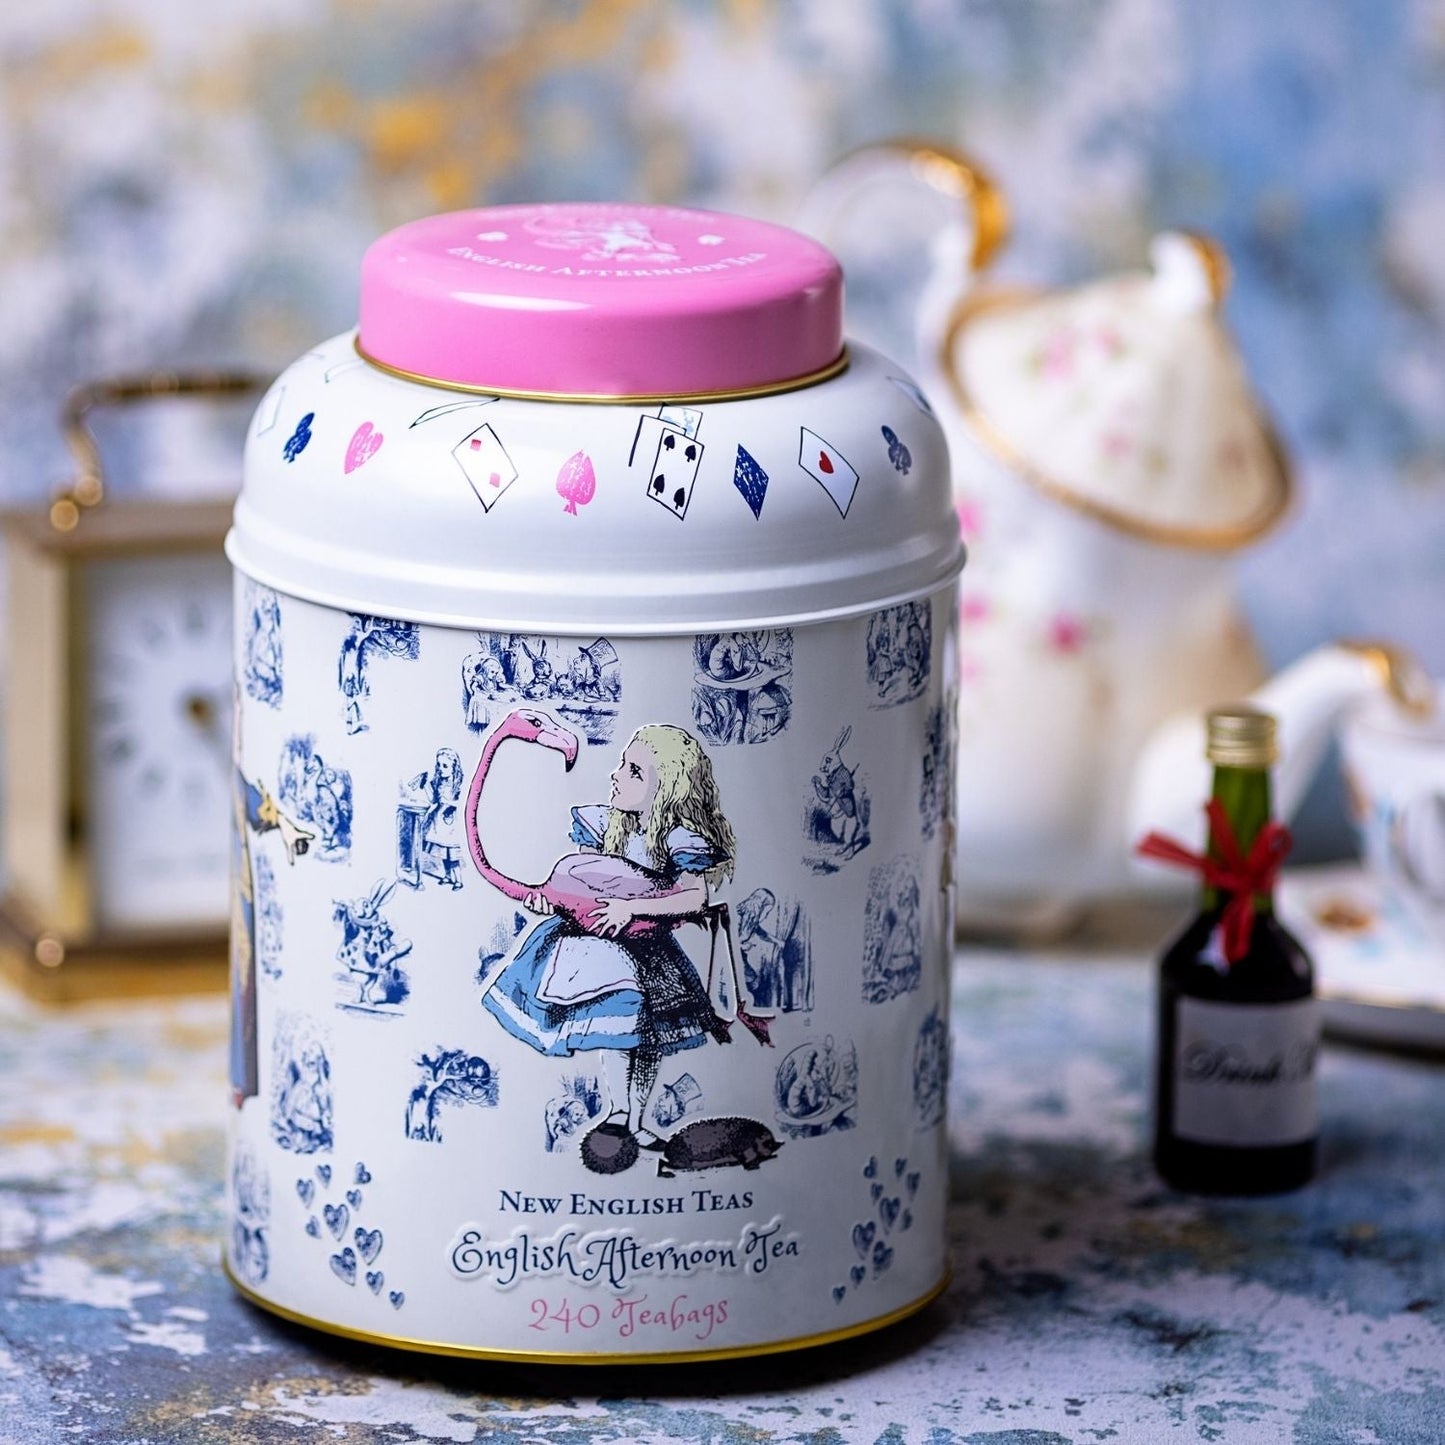 Vintage Alice in Wonderland Tea Caddy with 240 English Afternoon Teabags Black Tea New English Teas 